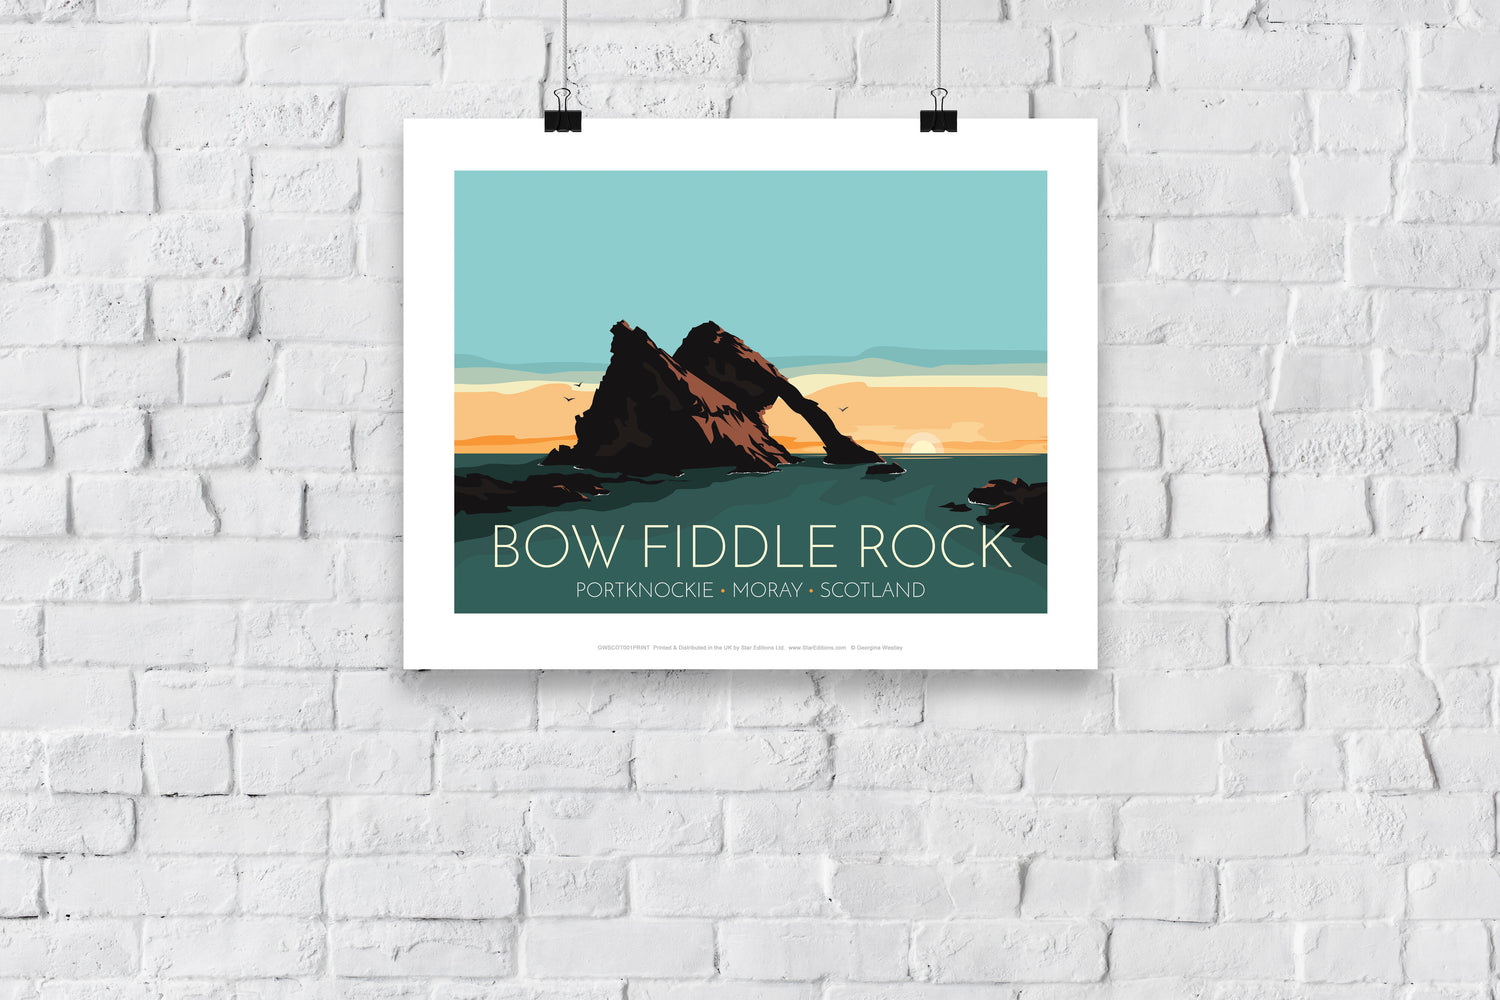 Bow Fiddle Rock, Moray, Scotland - Art Print